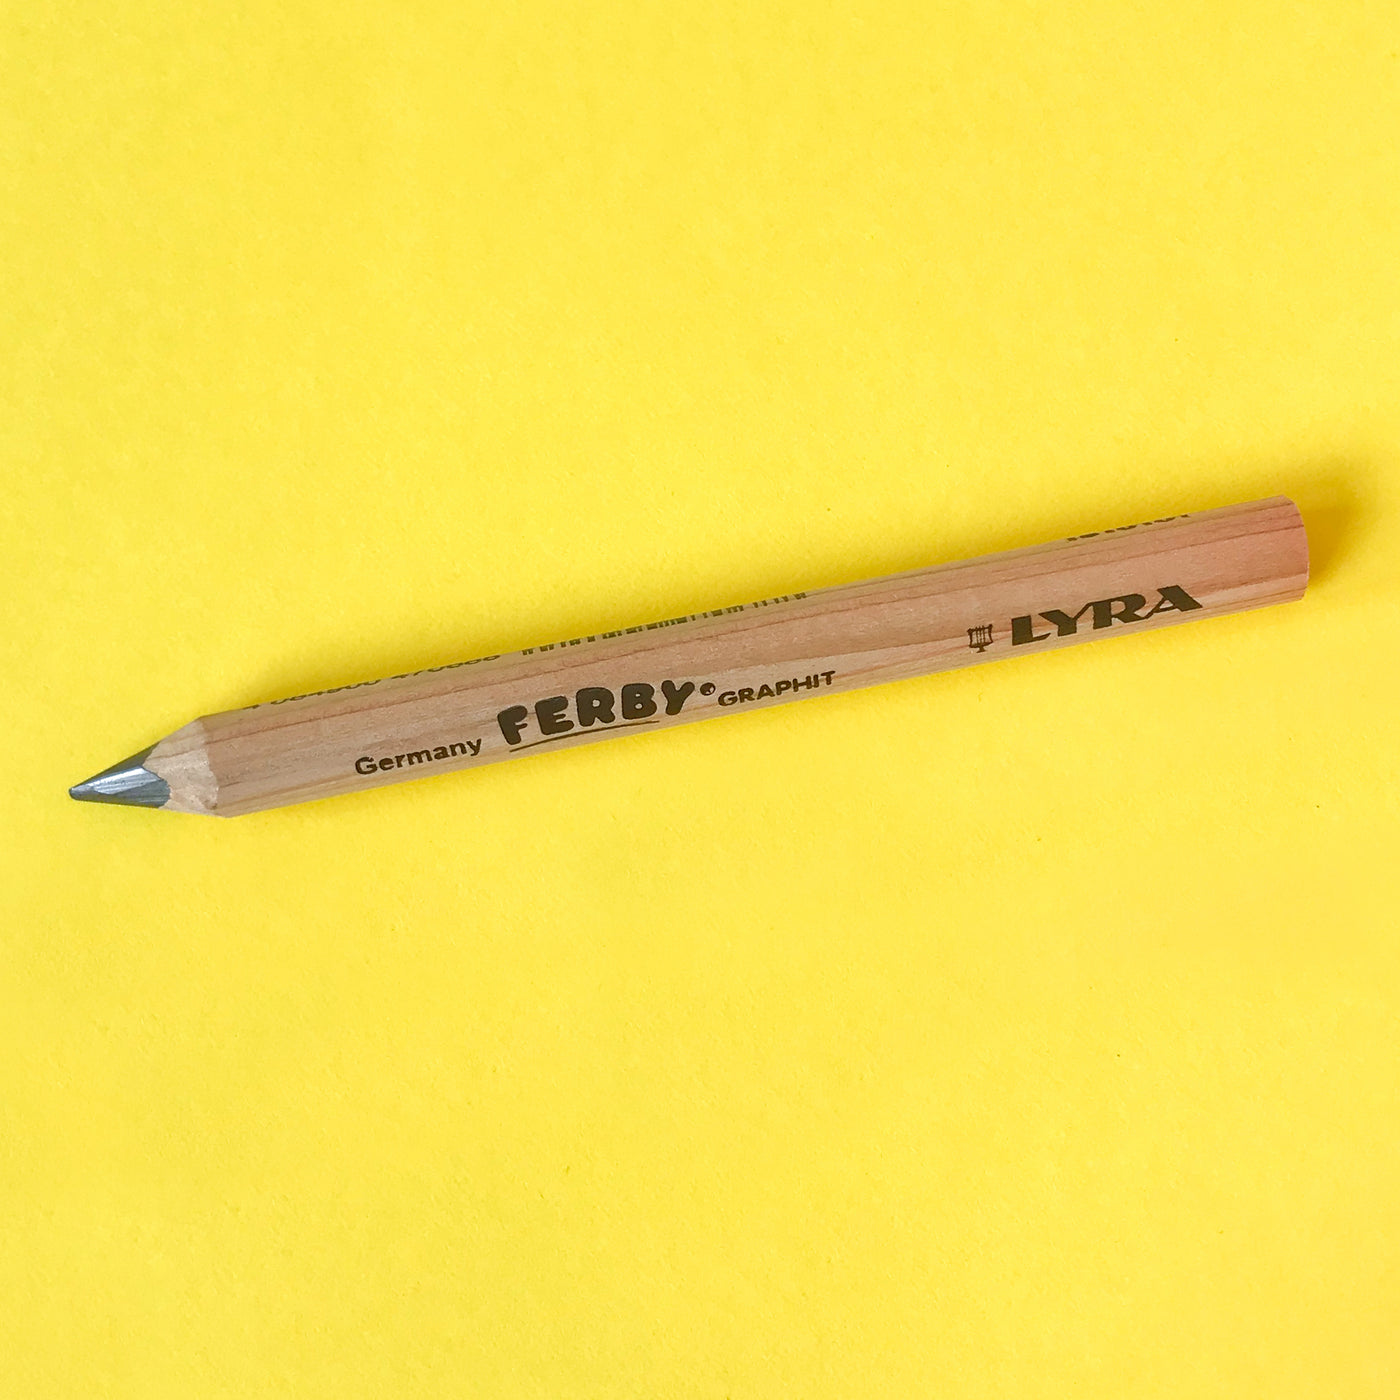 Lyra Super Ferby HB Graphite Pencil in a small size